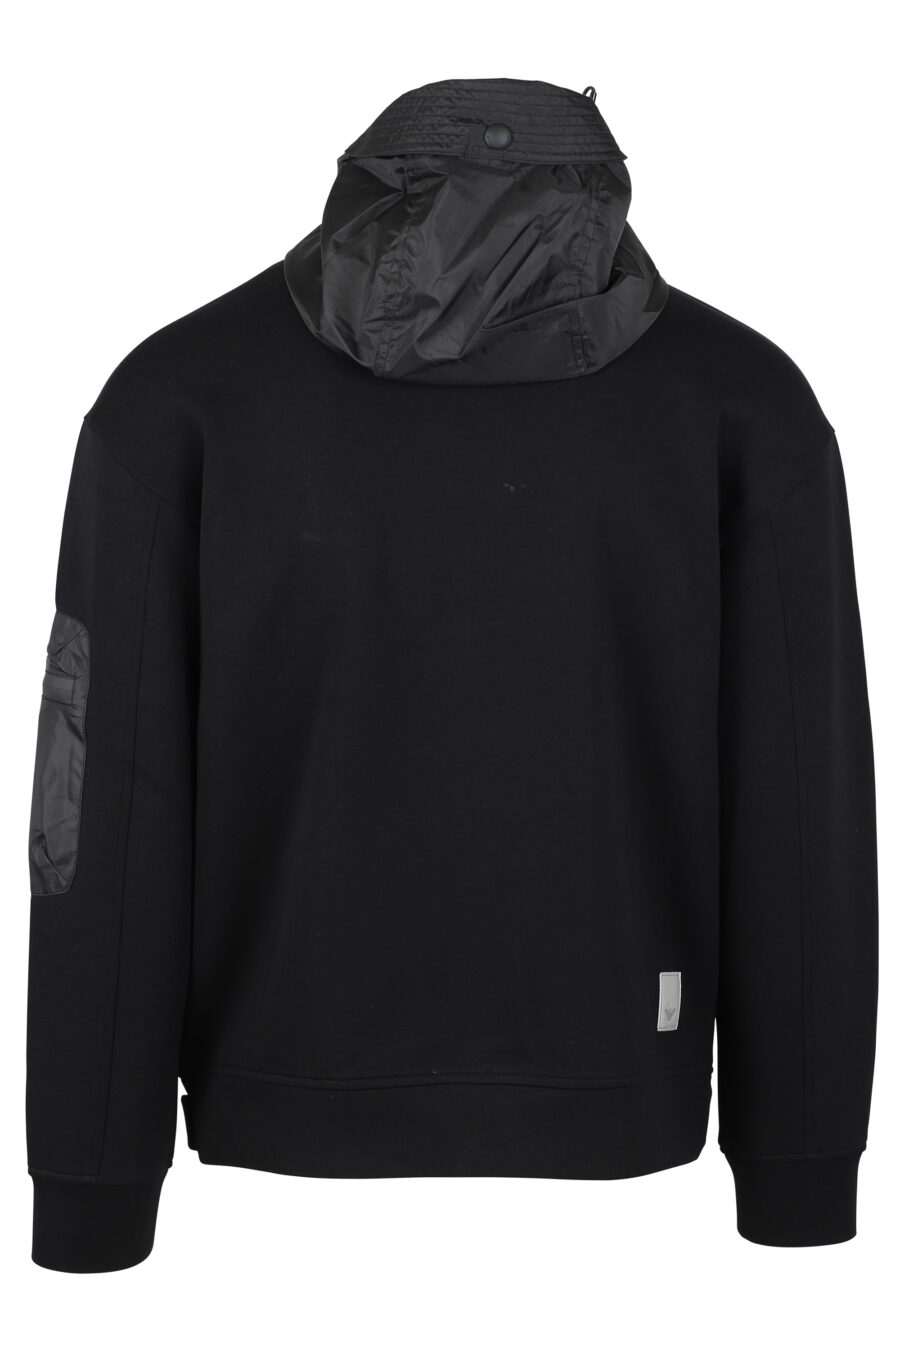 Sweatshirt preta com fecho de correr, bolso lateral e mini logótipo - IMG 4697